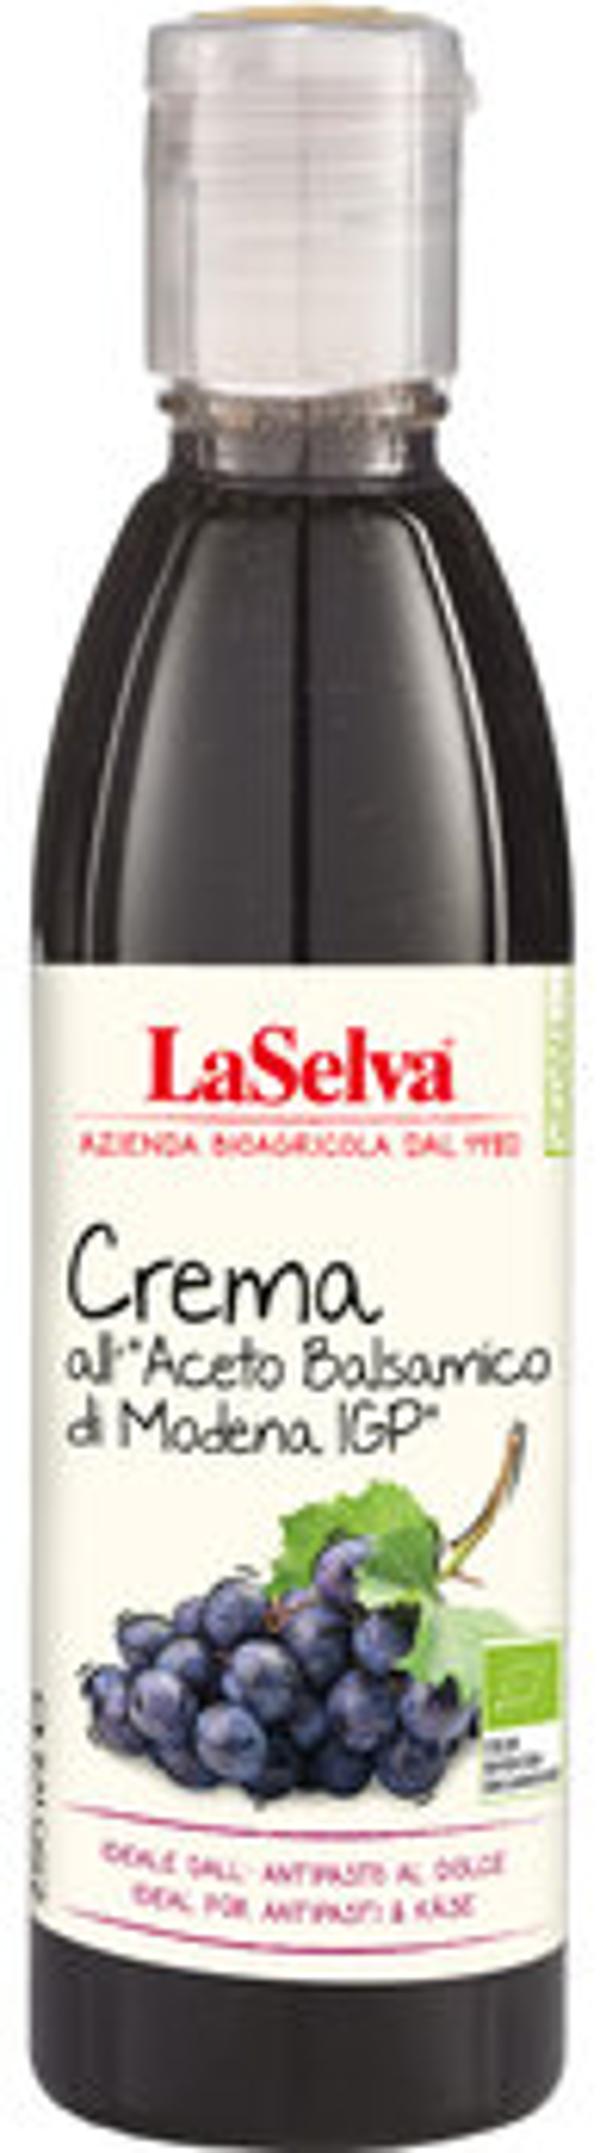 Produktfoto zu Crema d'Aceto Balsamico 250ml